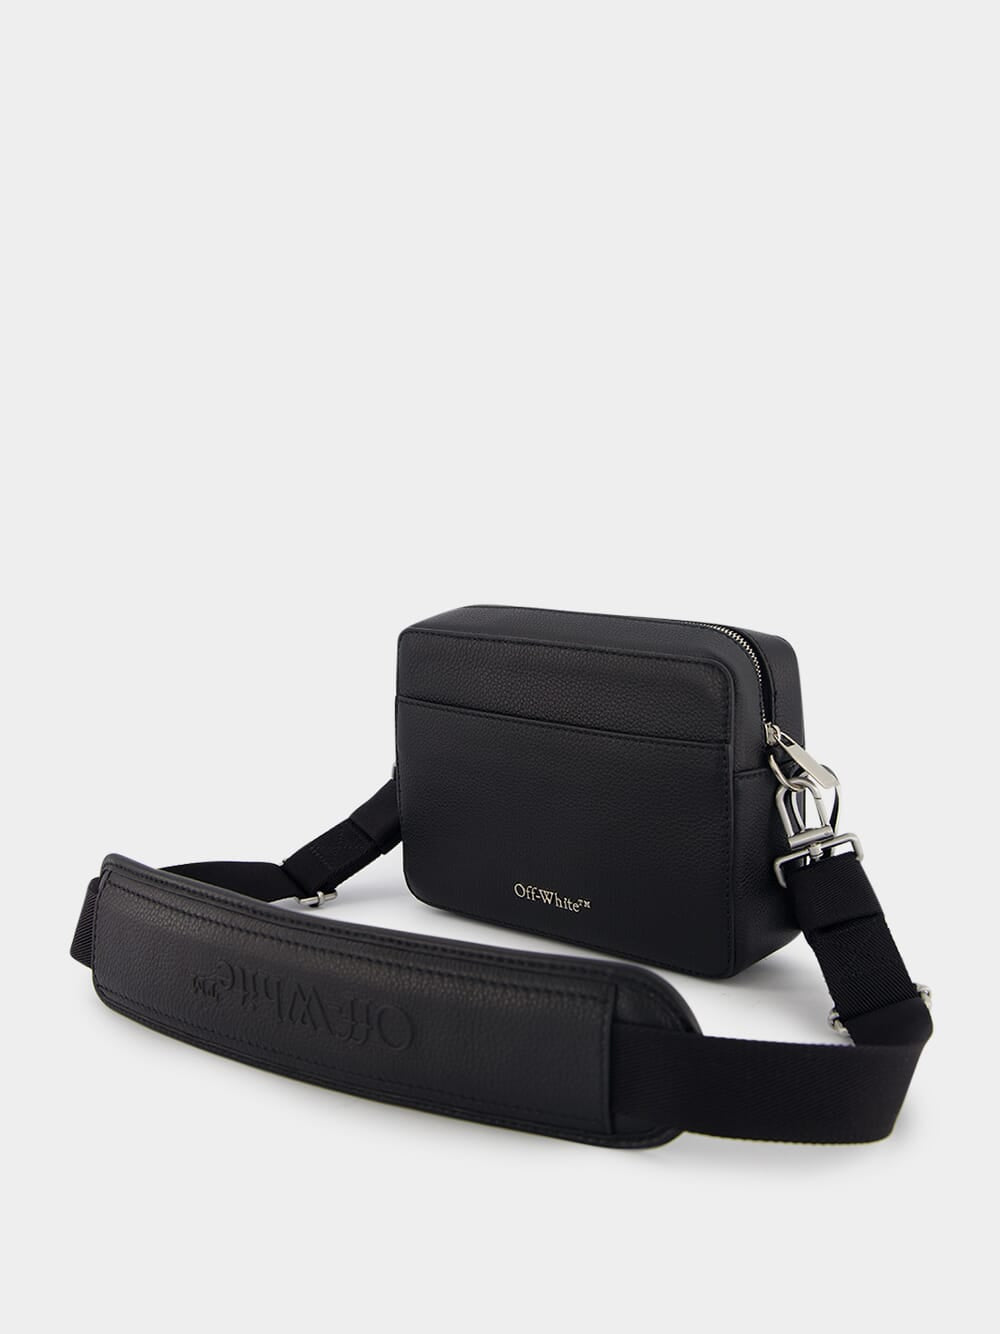 Off-WhiteDiag Camera Bag at Fashion Clinic